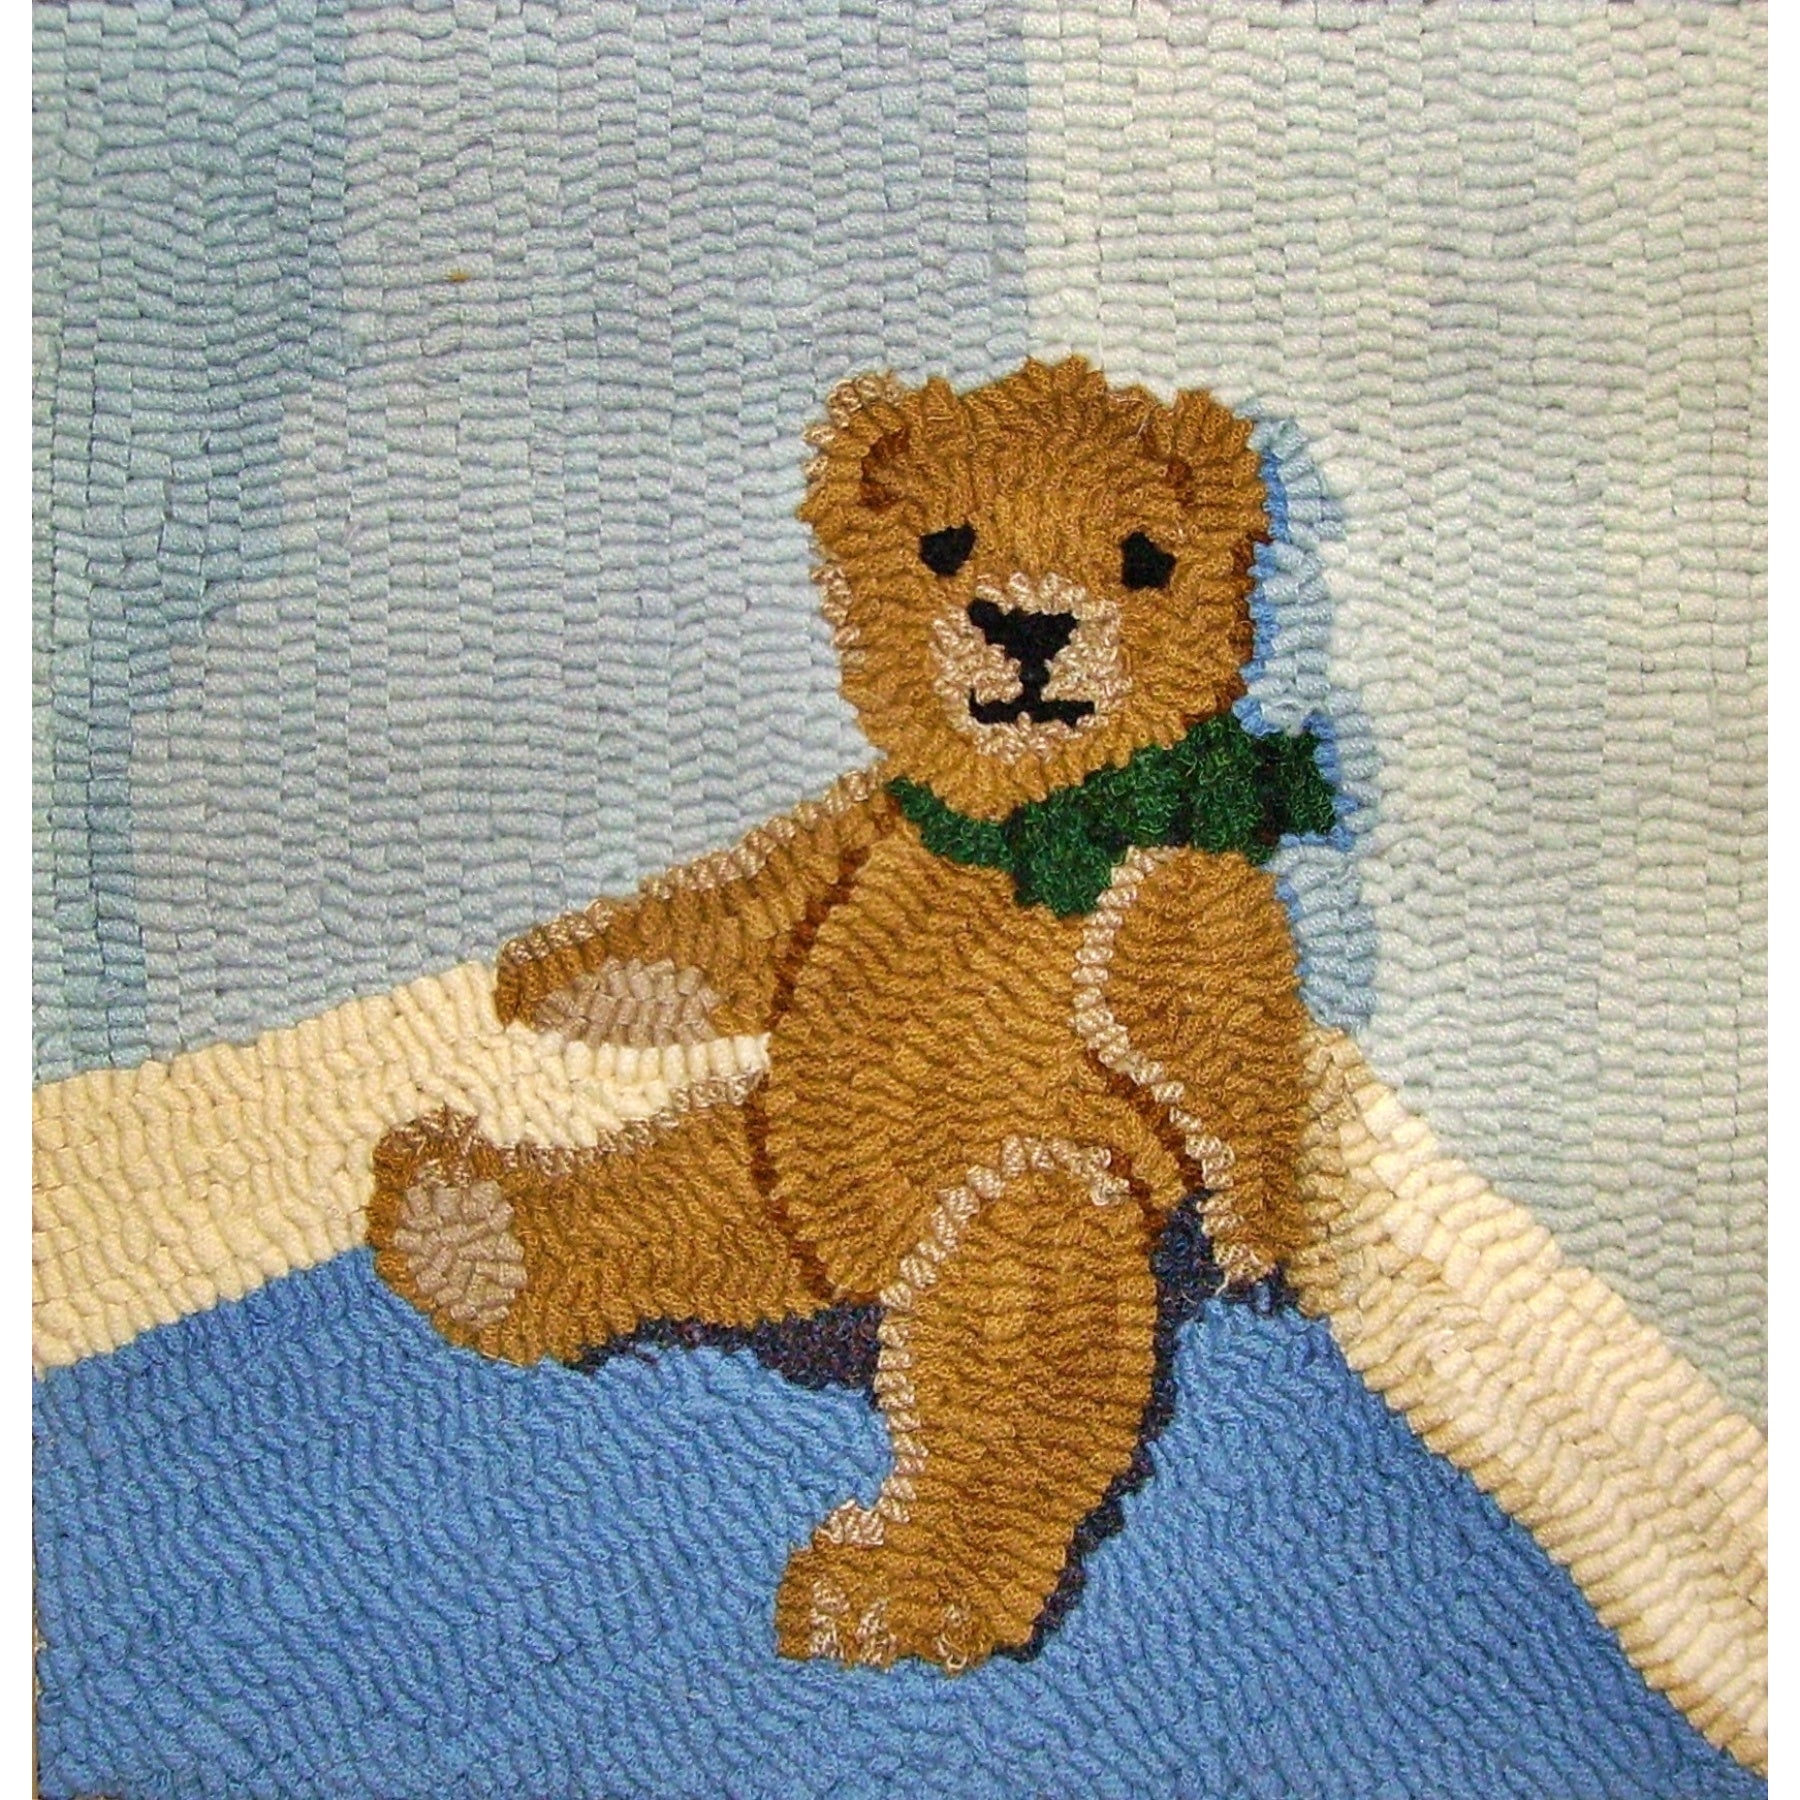 Corner Teddy Bear, rug hooked by Kay Forbush